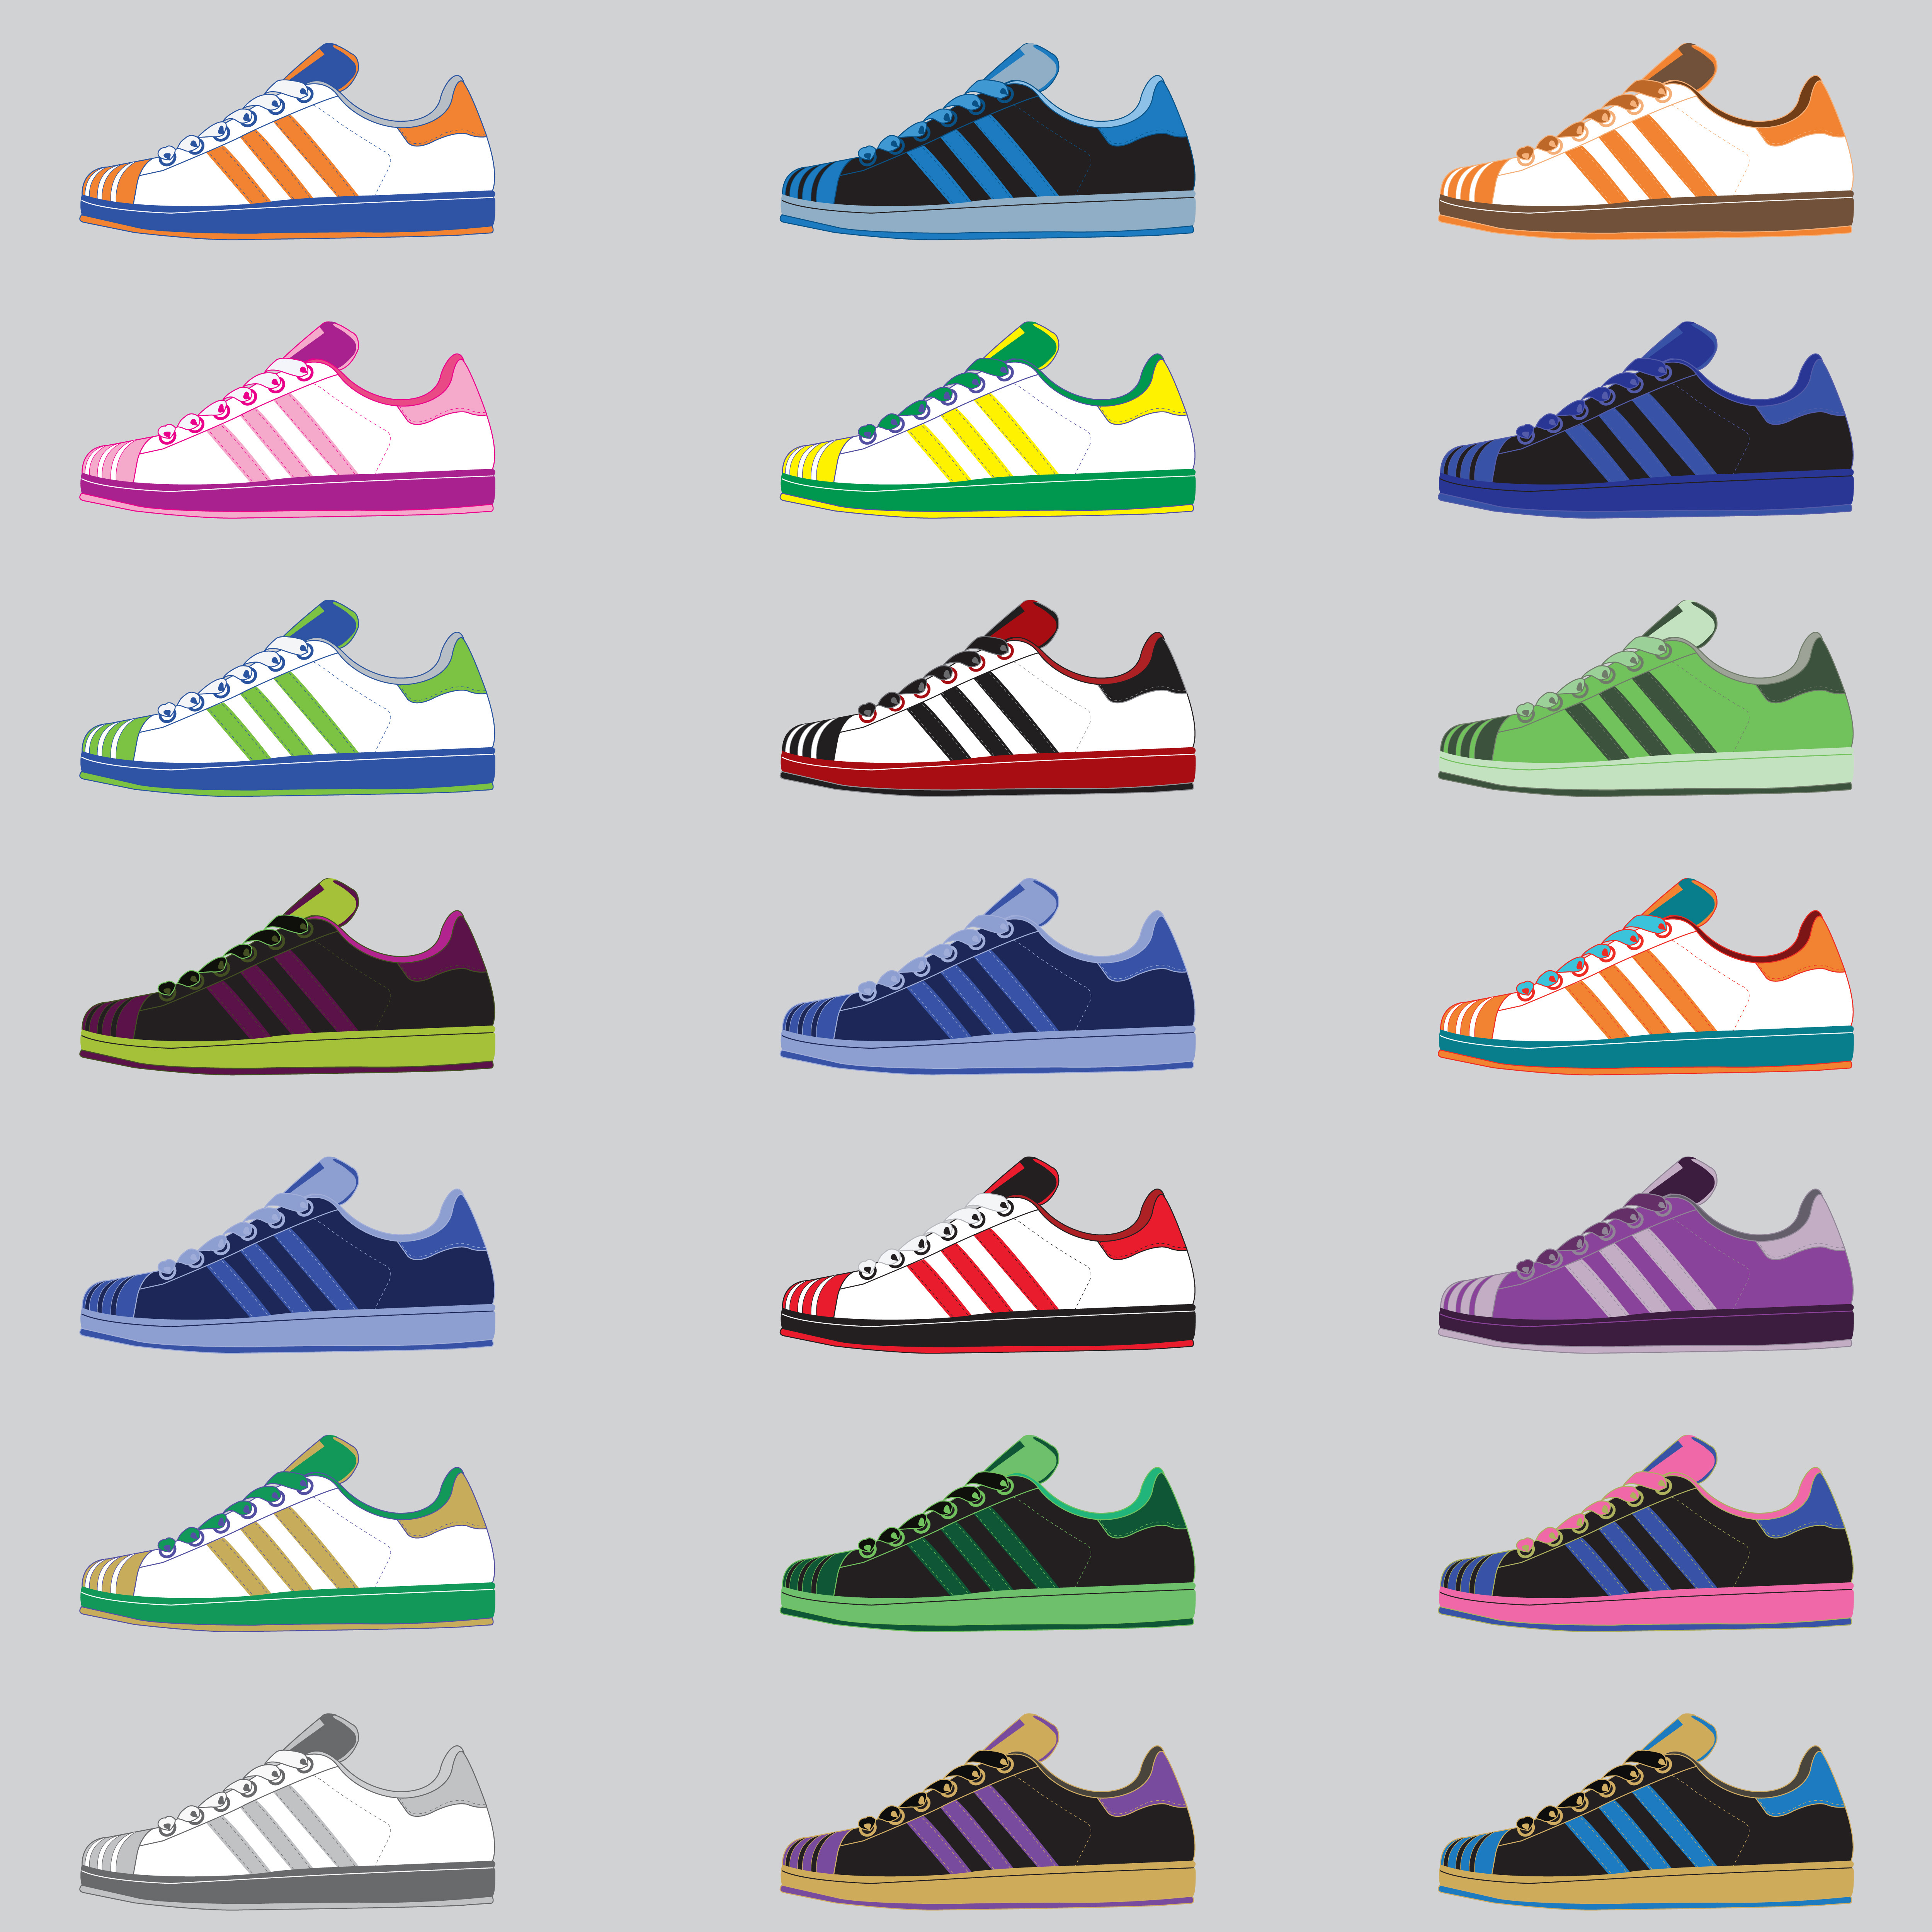 Sport shoes pack - Download Free Vectors, Clipart Graphics & Vector Art